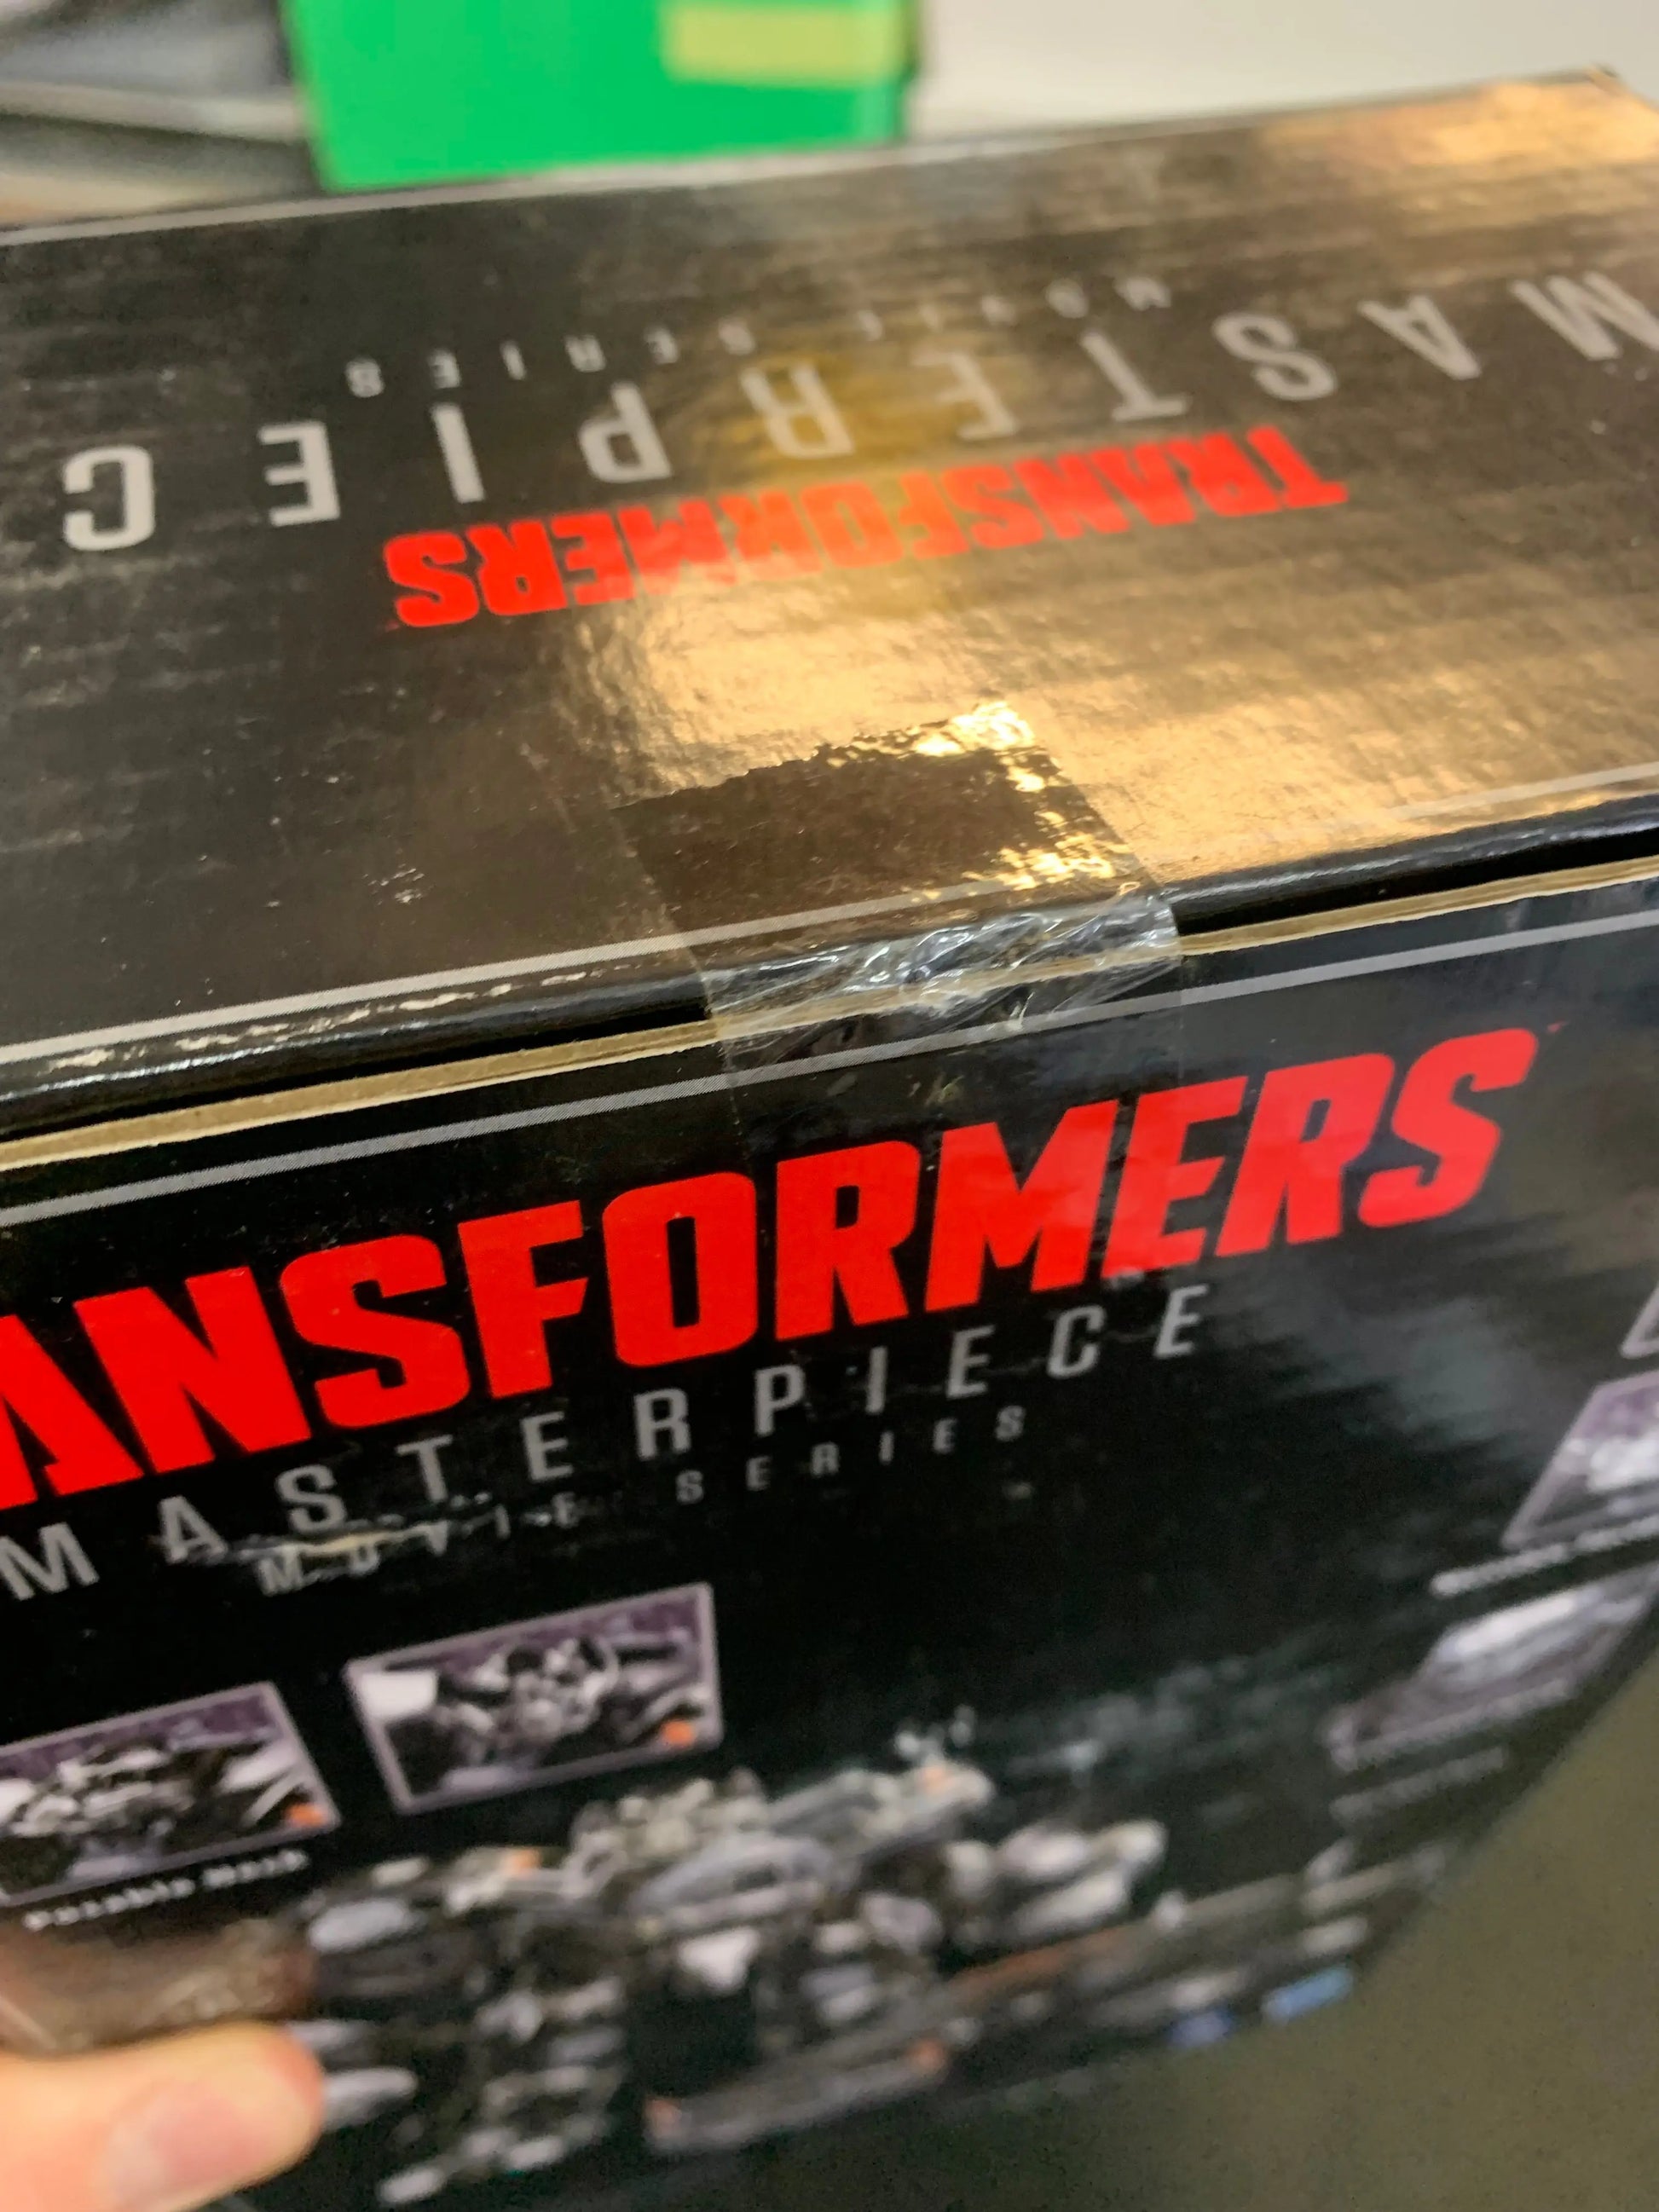 Takara Tomy Transformers Masterpiece Movie Series MPM-6 Ironhide ❤️NEW❤️ FRENLY BRICKS - Open 7 Days